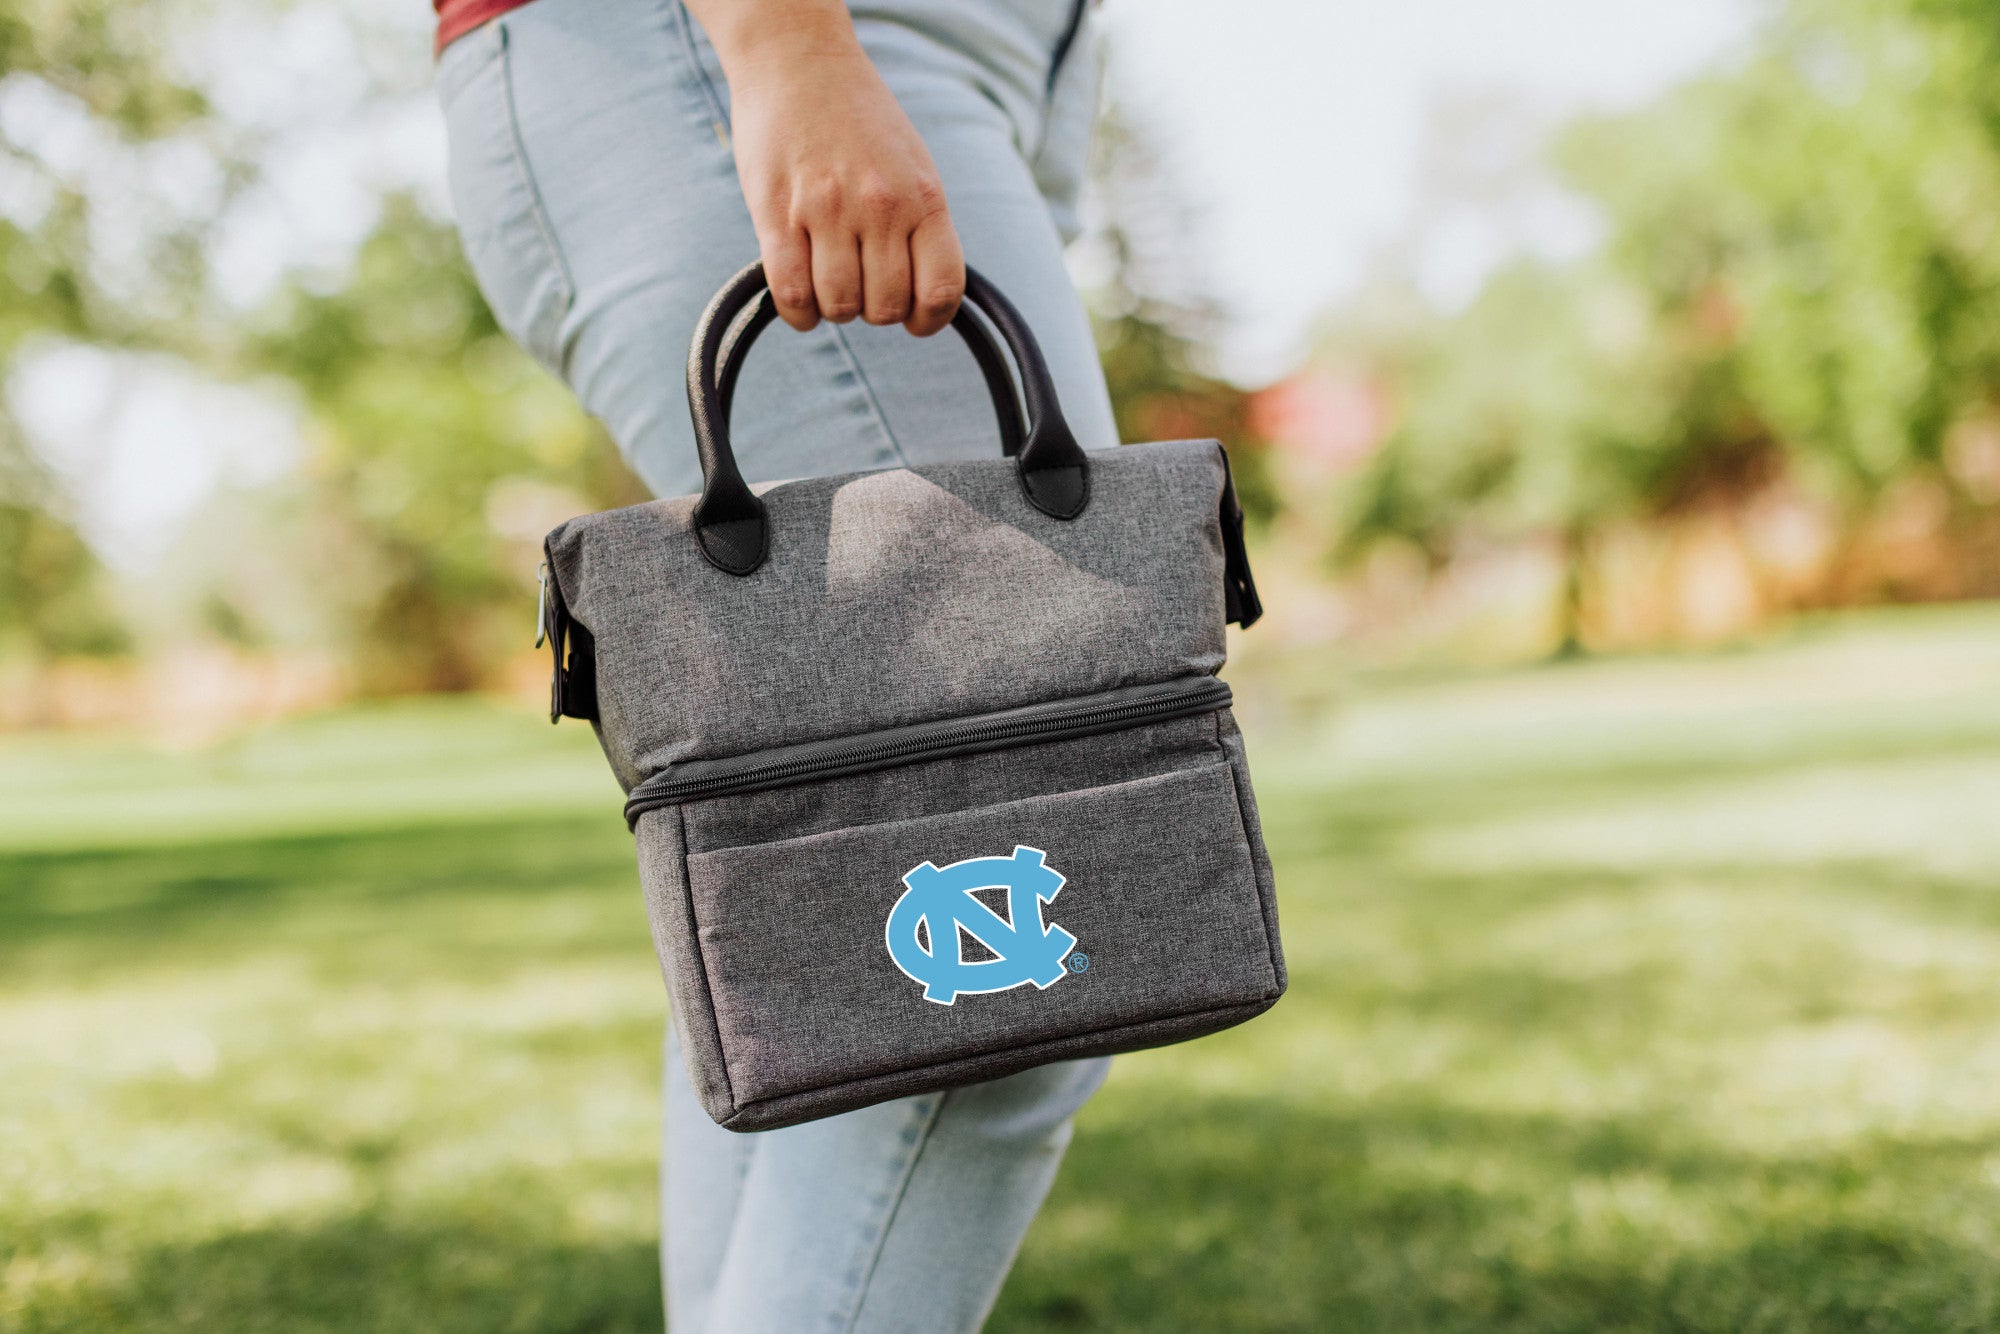 North Carolina Tar Heels - Urban Lunch Bag Cooler